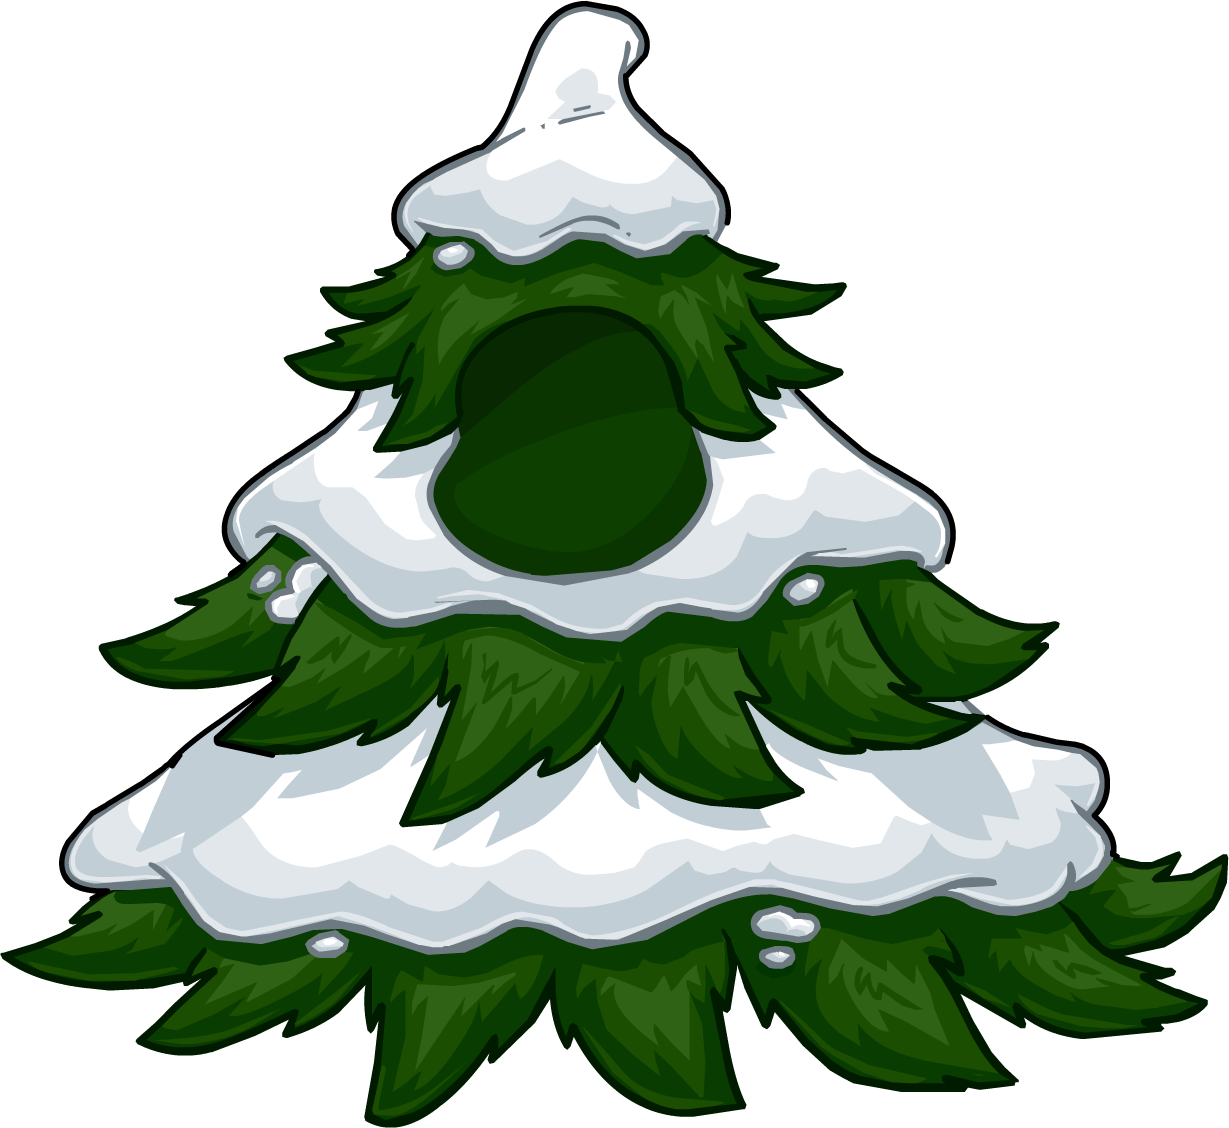 Tree Costume - Tree Costume Club Penguin (1229x1128)